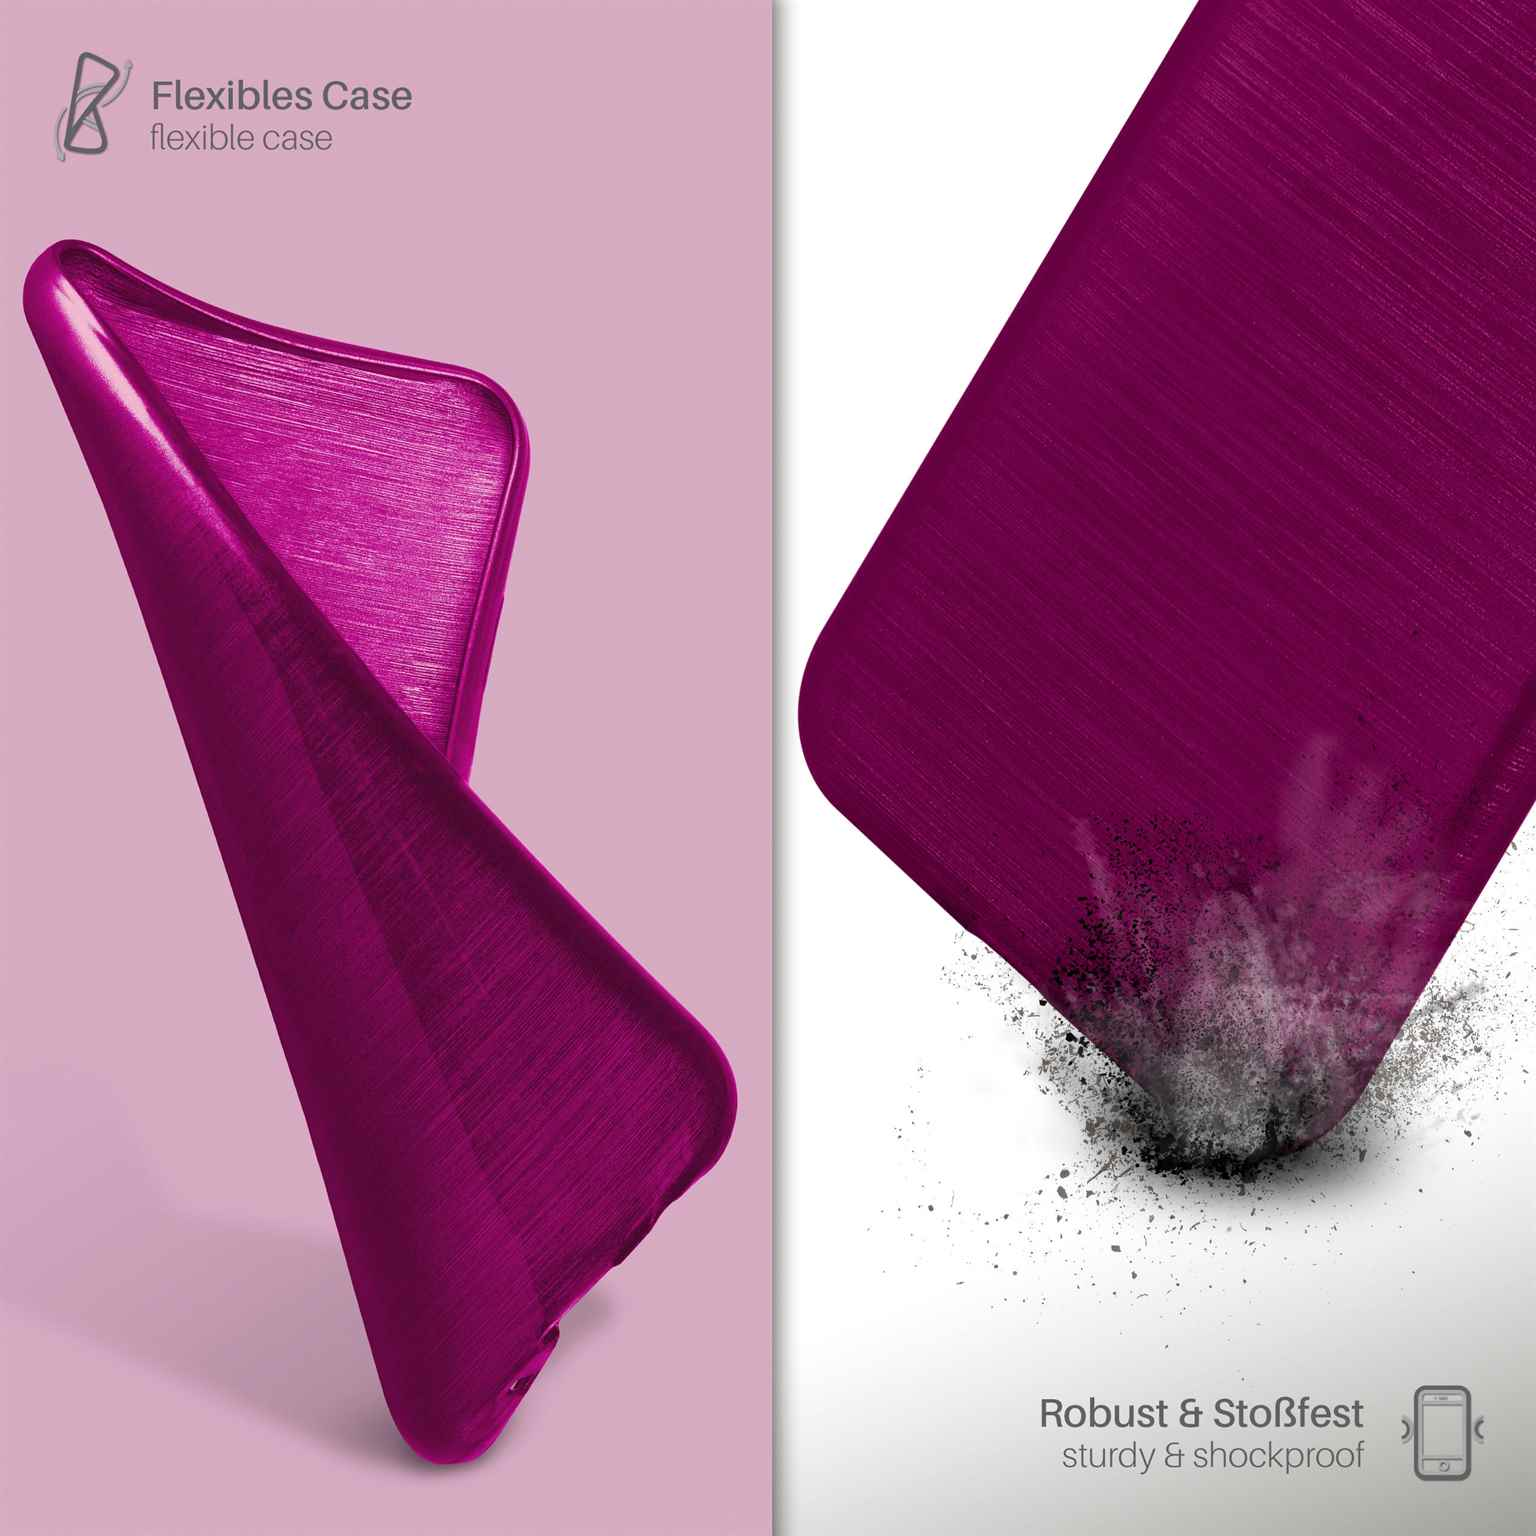 LG, Brushed MOEX Case, Backcover, Purpure-Purple L65,